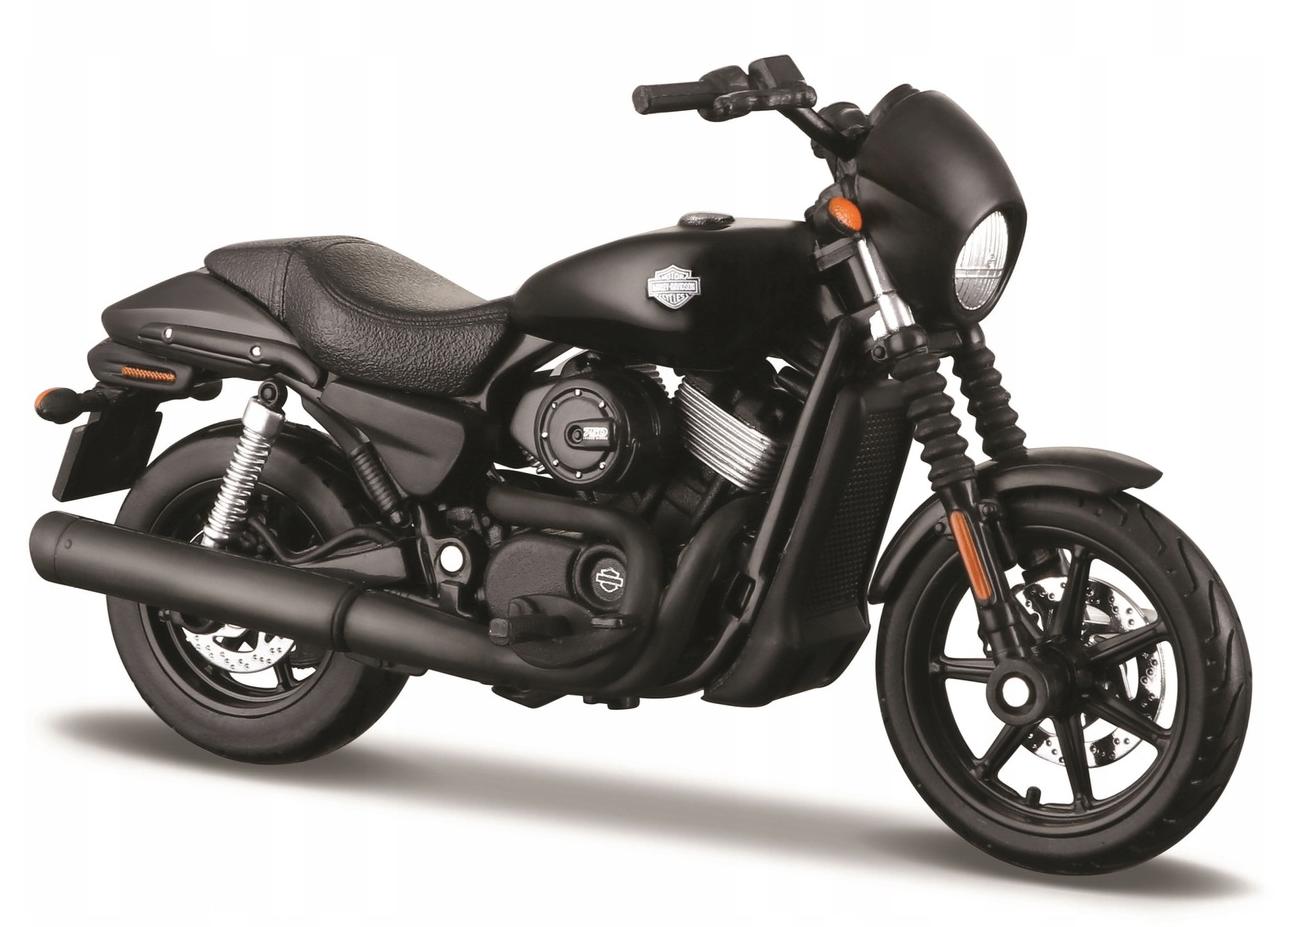 Коллекционный мотоцикл Maisto 1:12 Harley Davidson Street 750 2015 года, черный